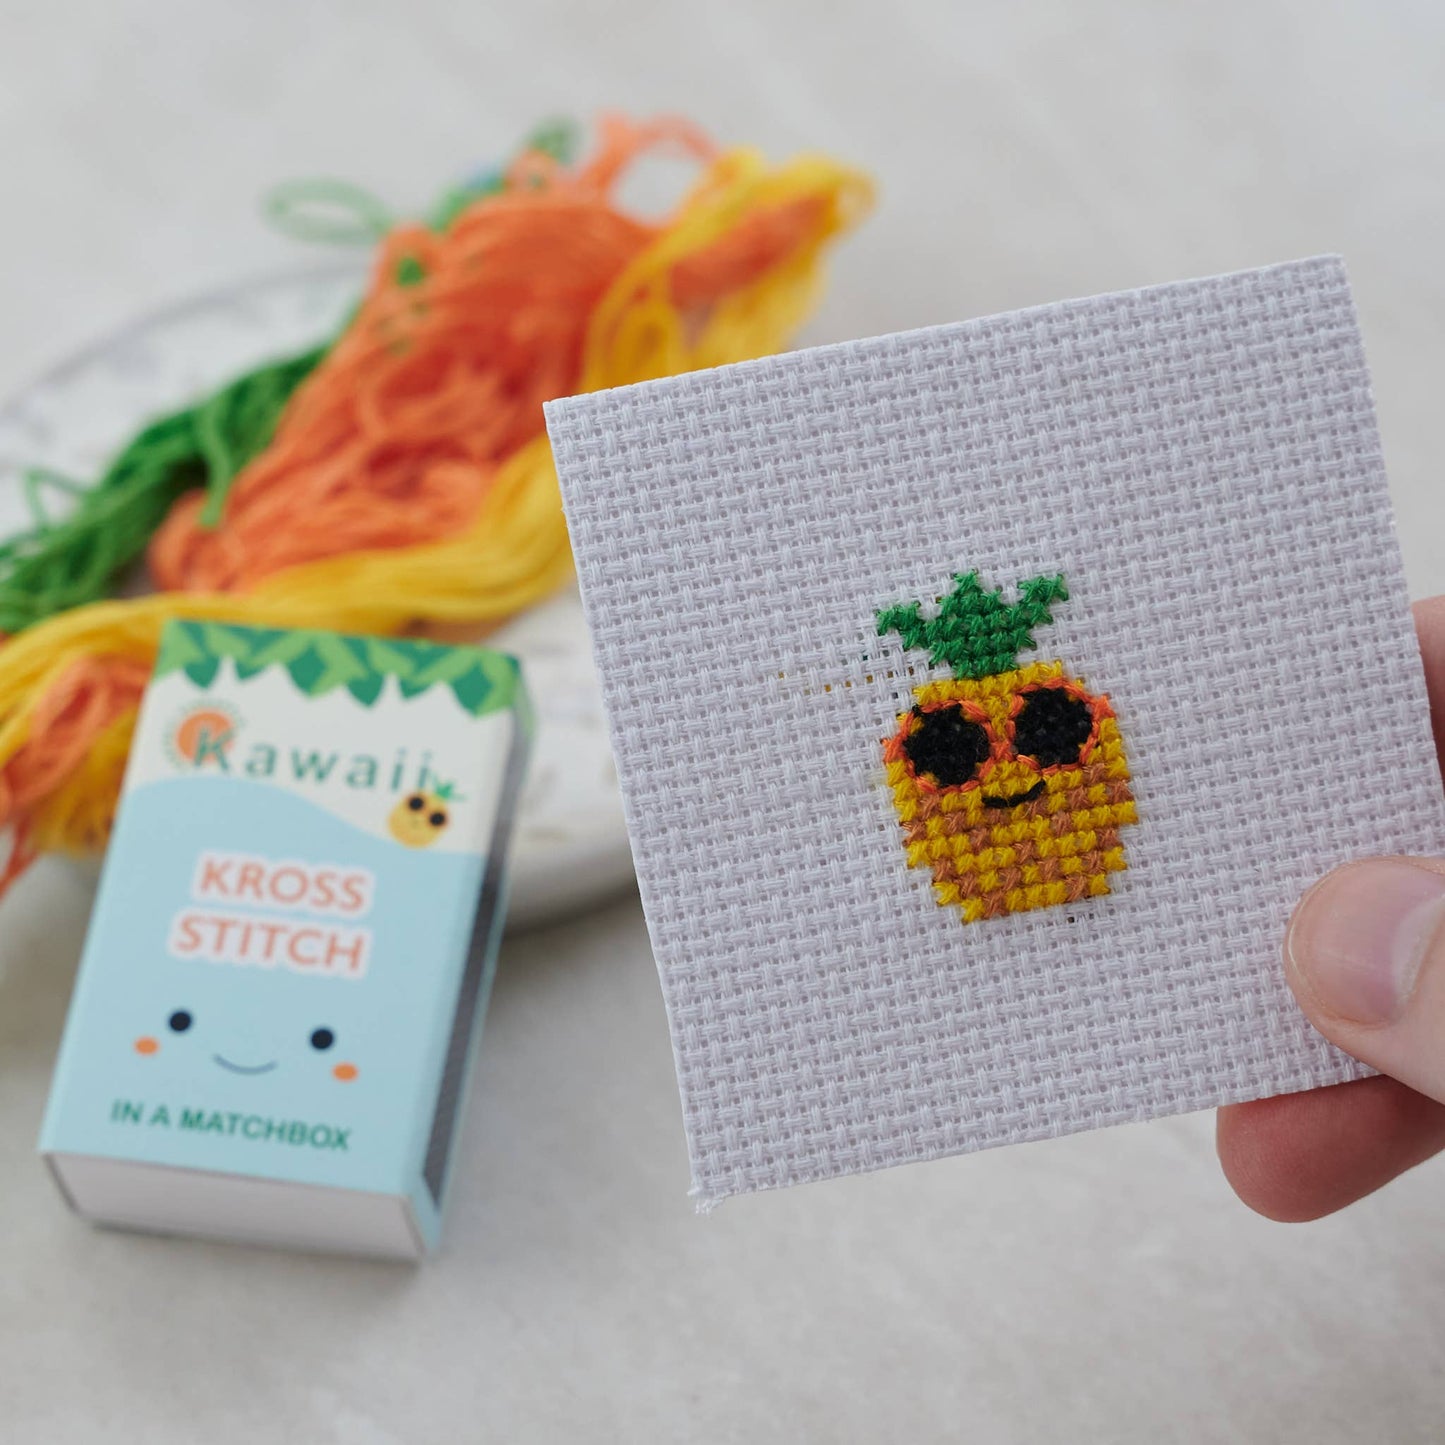 Kawaii Pineapple Cross Stitch Kit In A Matchbox